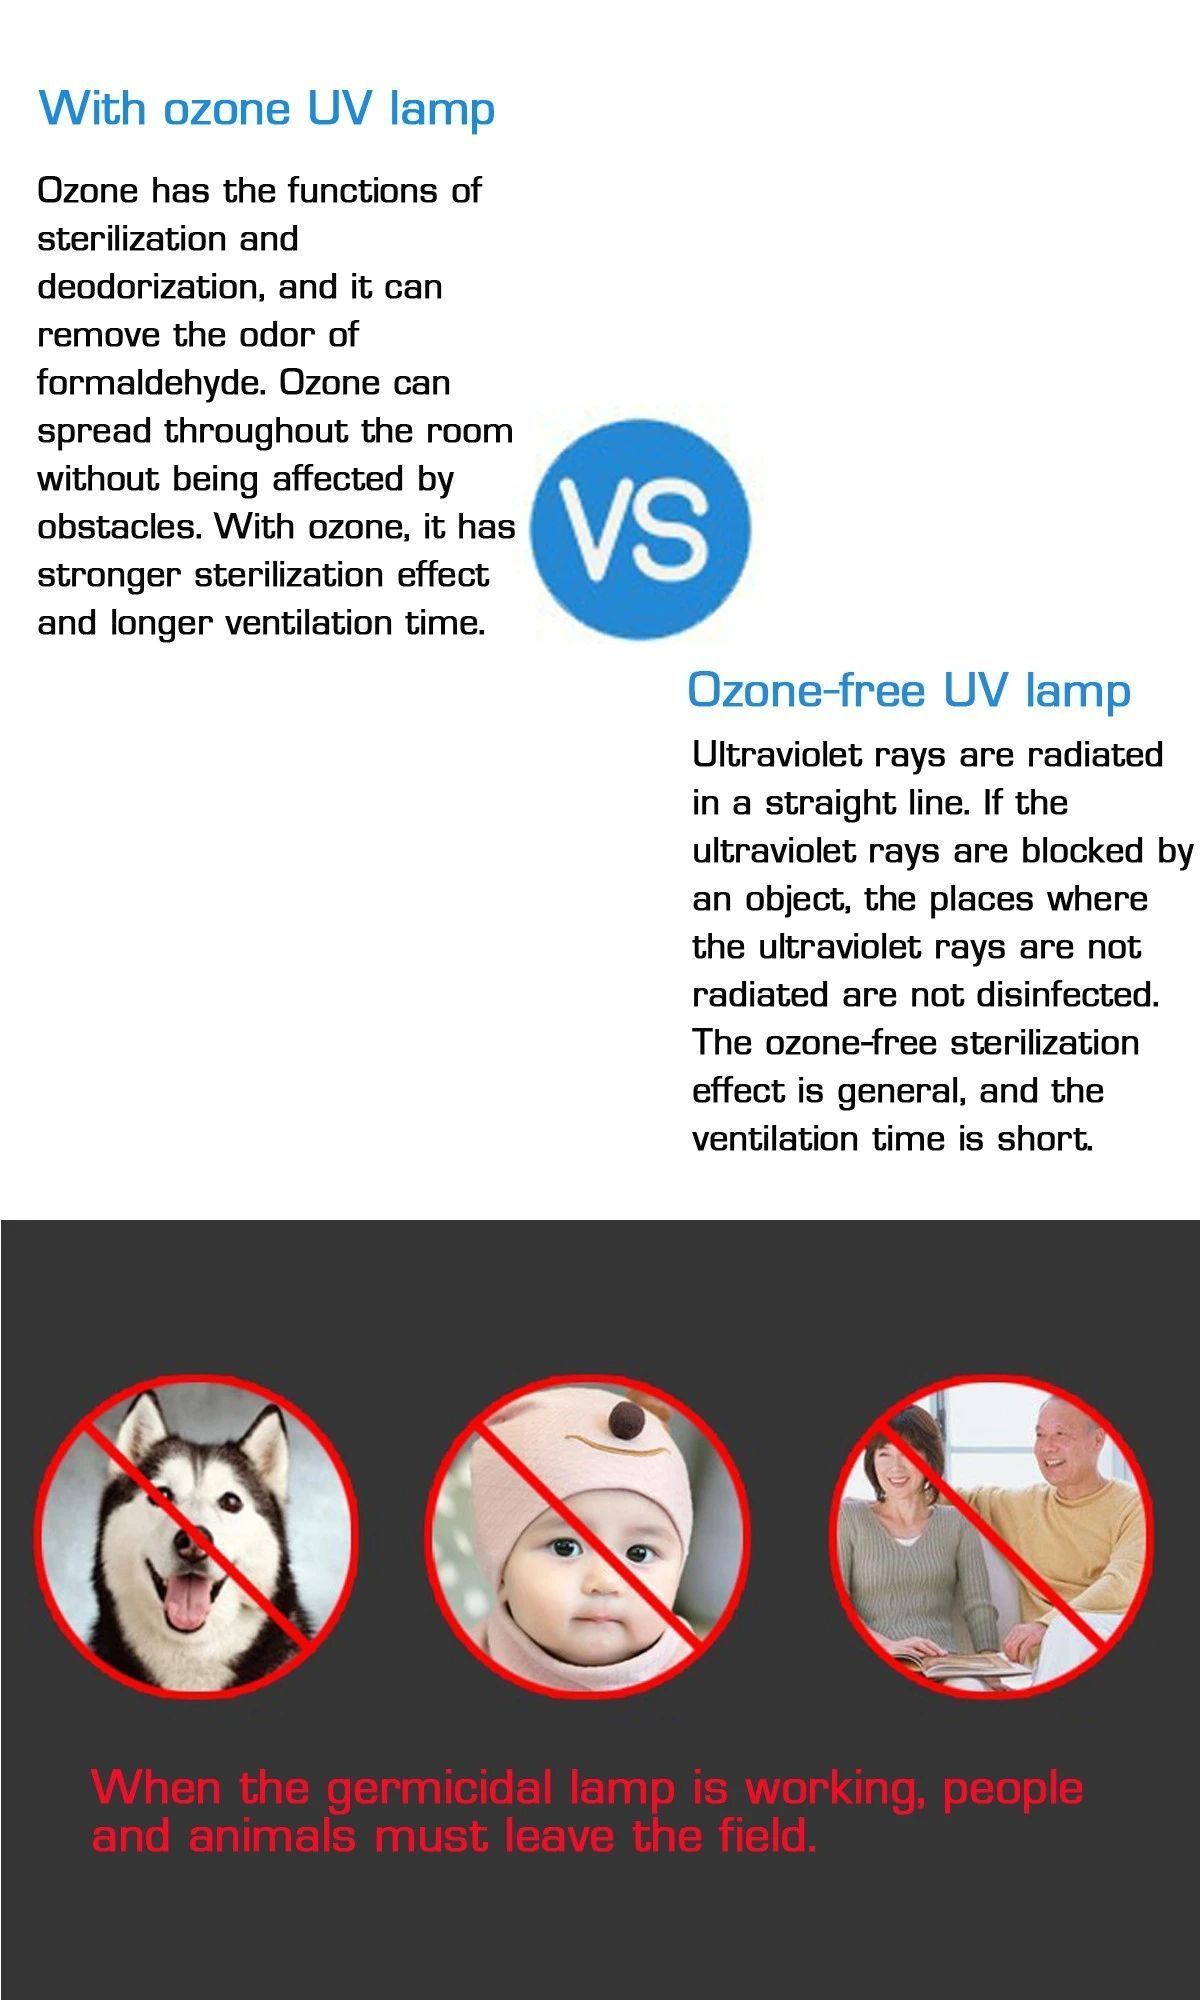 38W58W-220V-UVC-Disinfection-Germicidal-Light-Portable-UVOzone-Sterilizer-Lamp-Desk-Mite-Removal-Dou-1663743